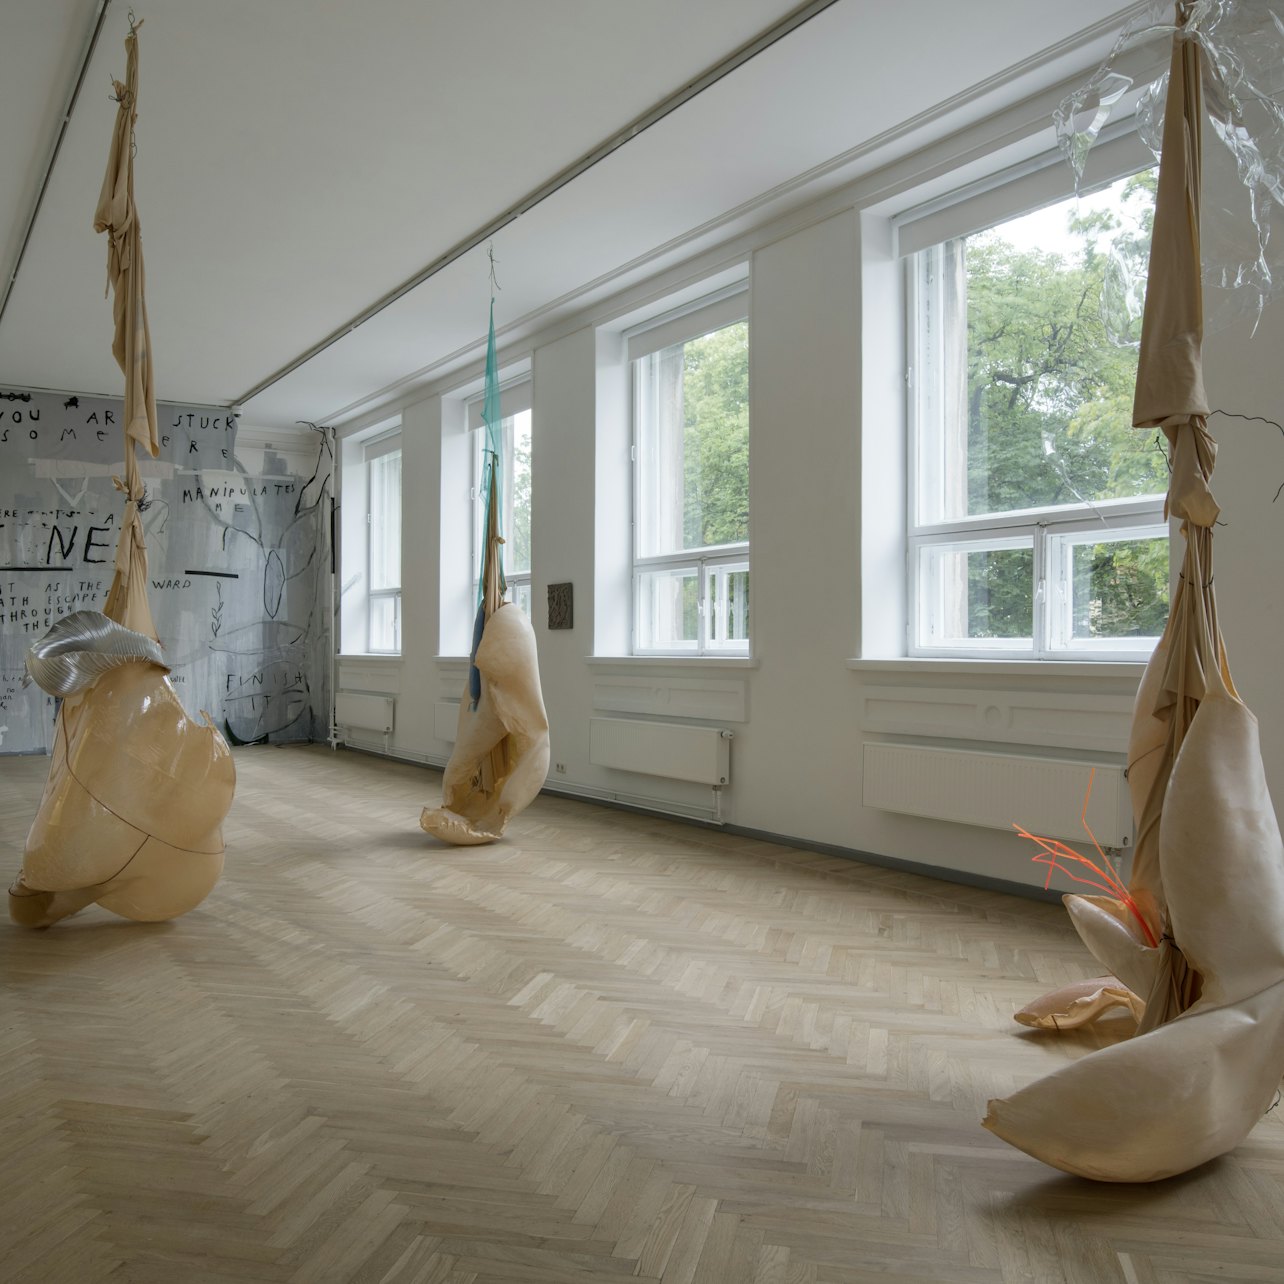 Tallinn Art Hall - Accommodations in Tallinn